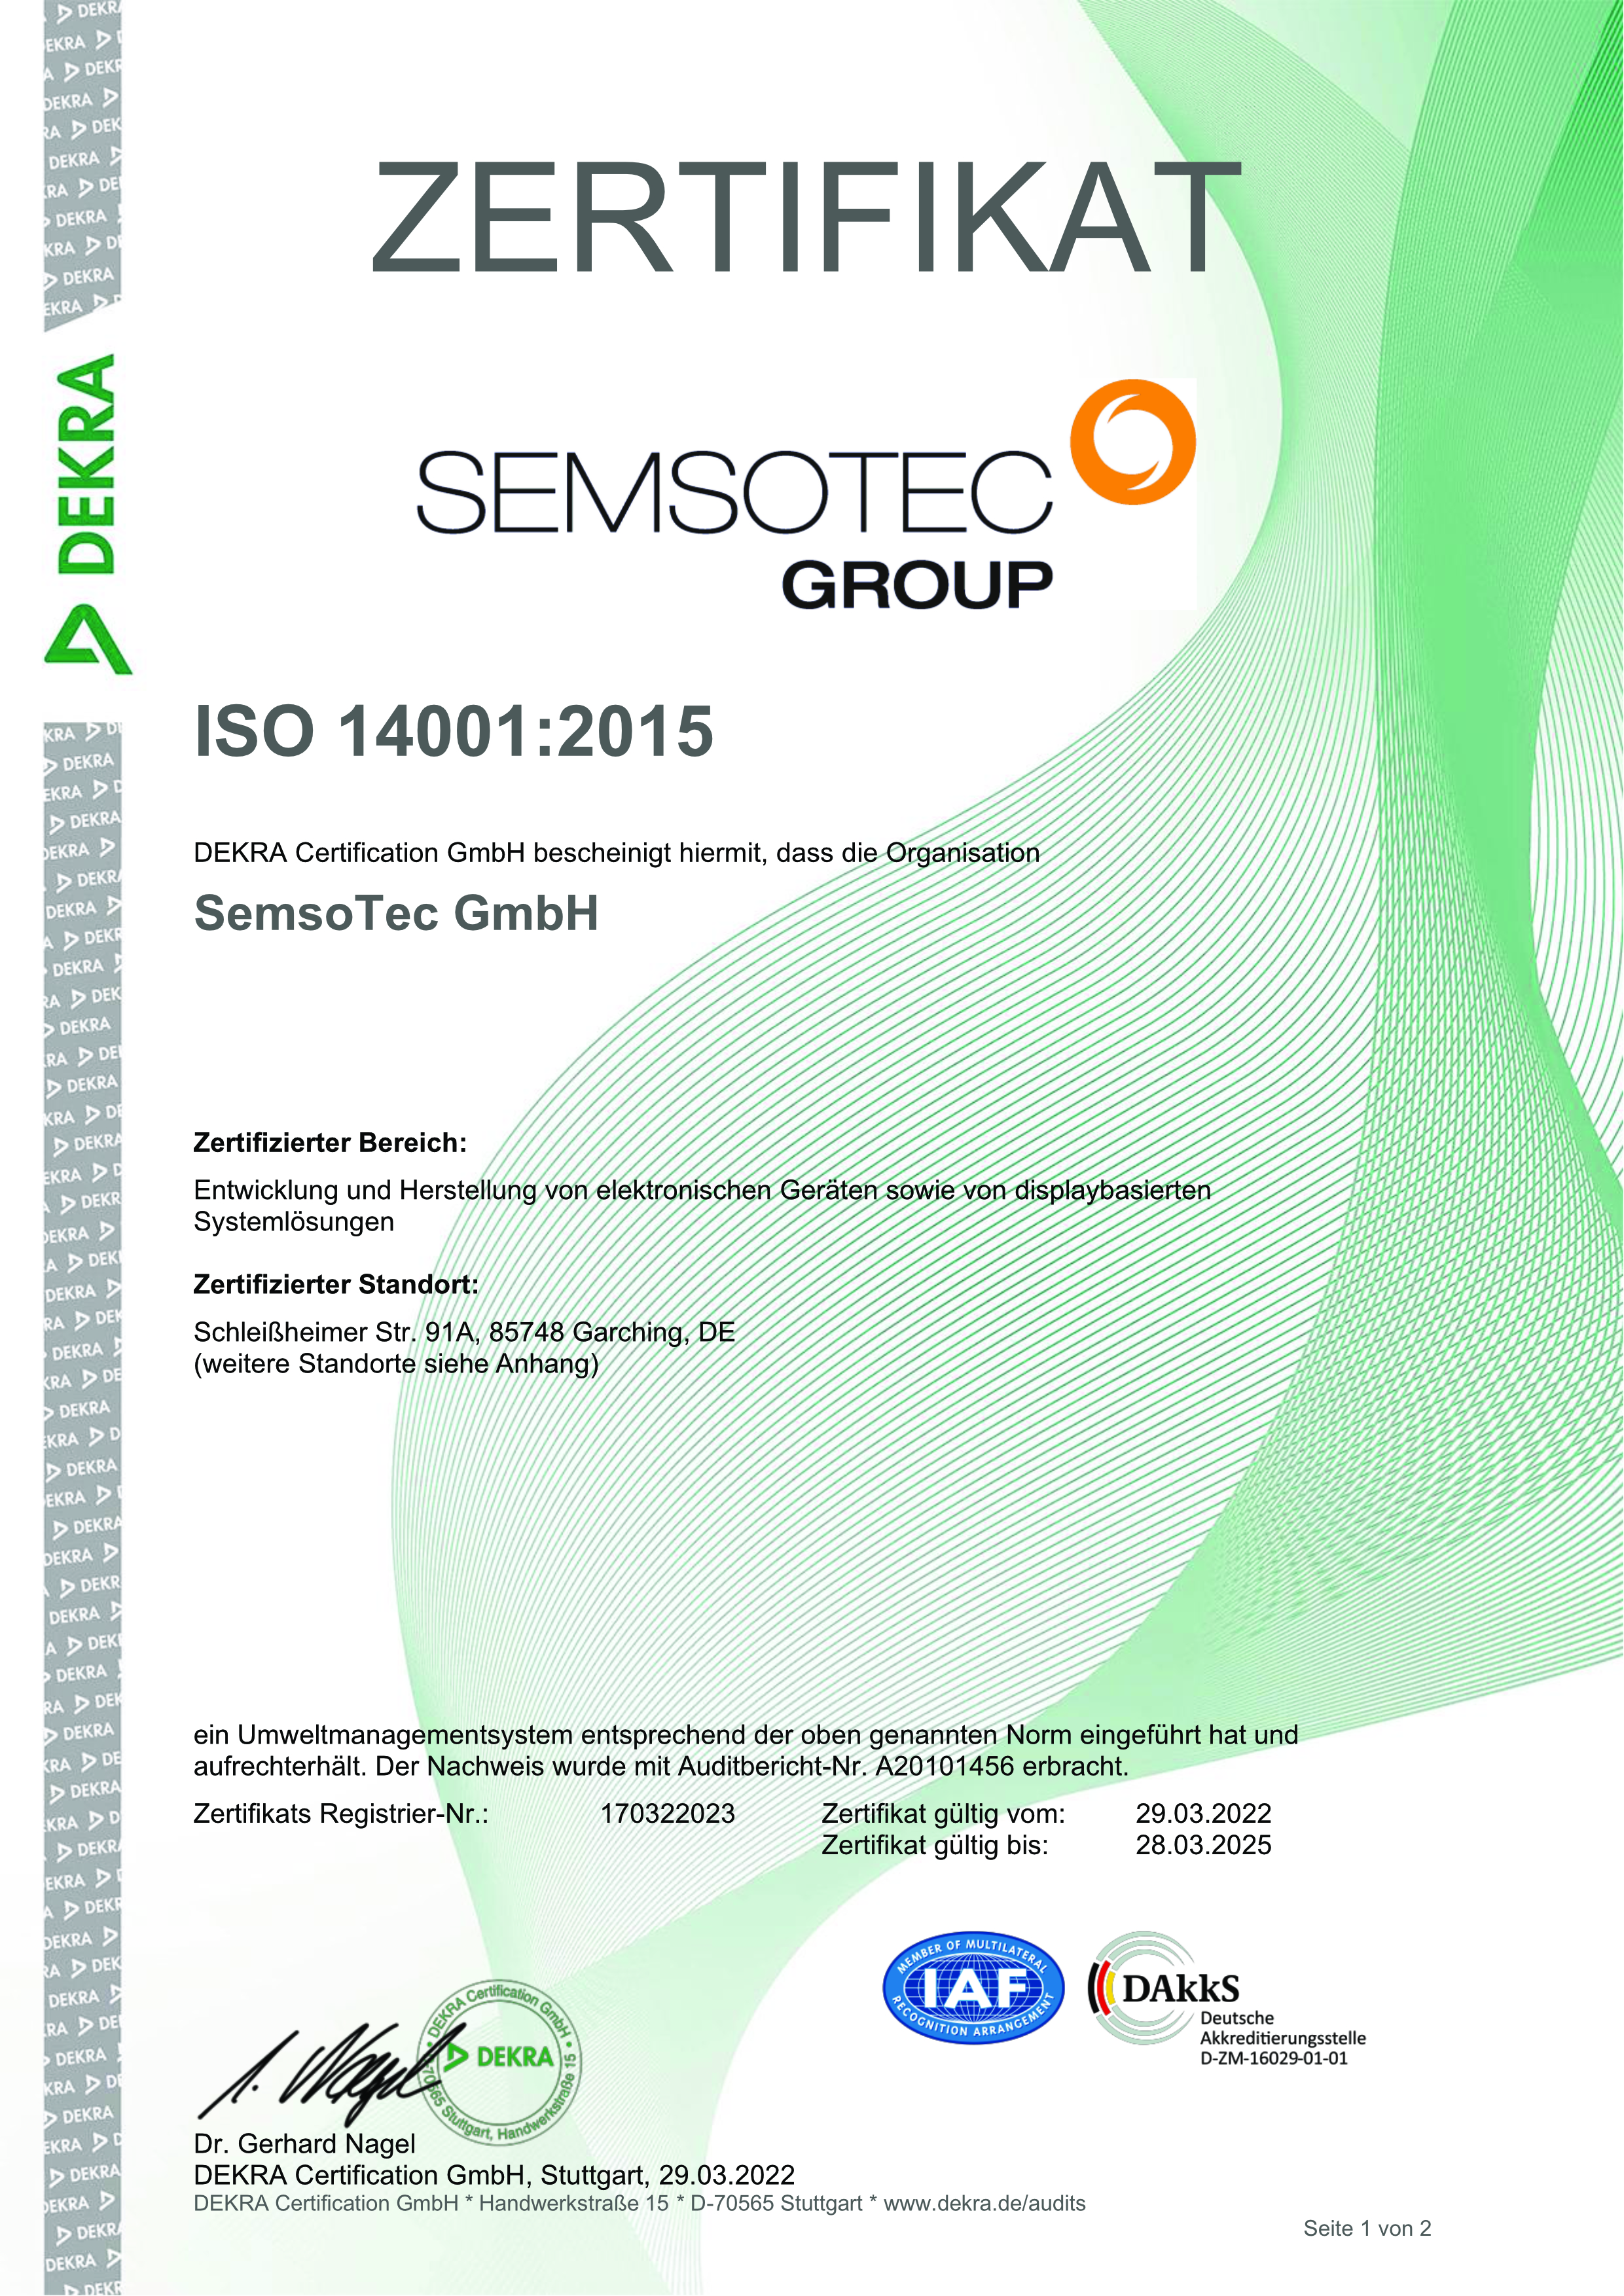 SemsoTec certified according to ISO 14001:2015 